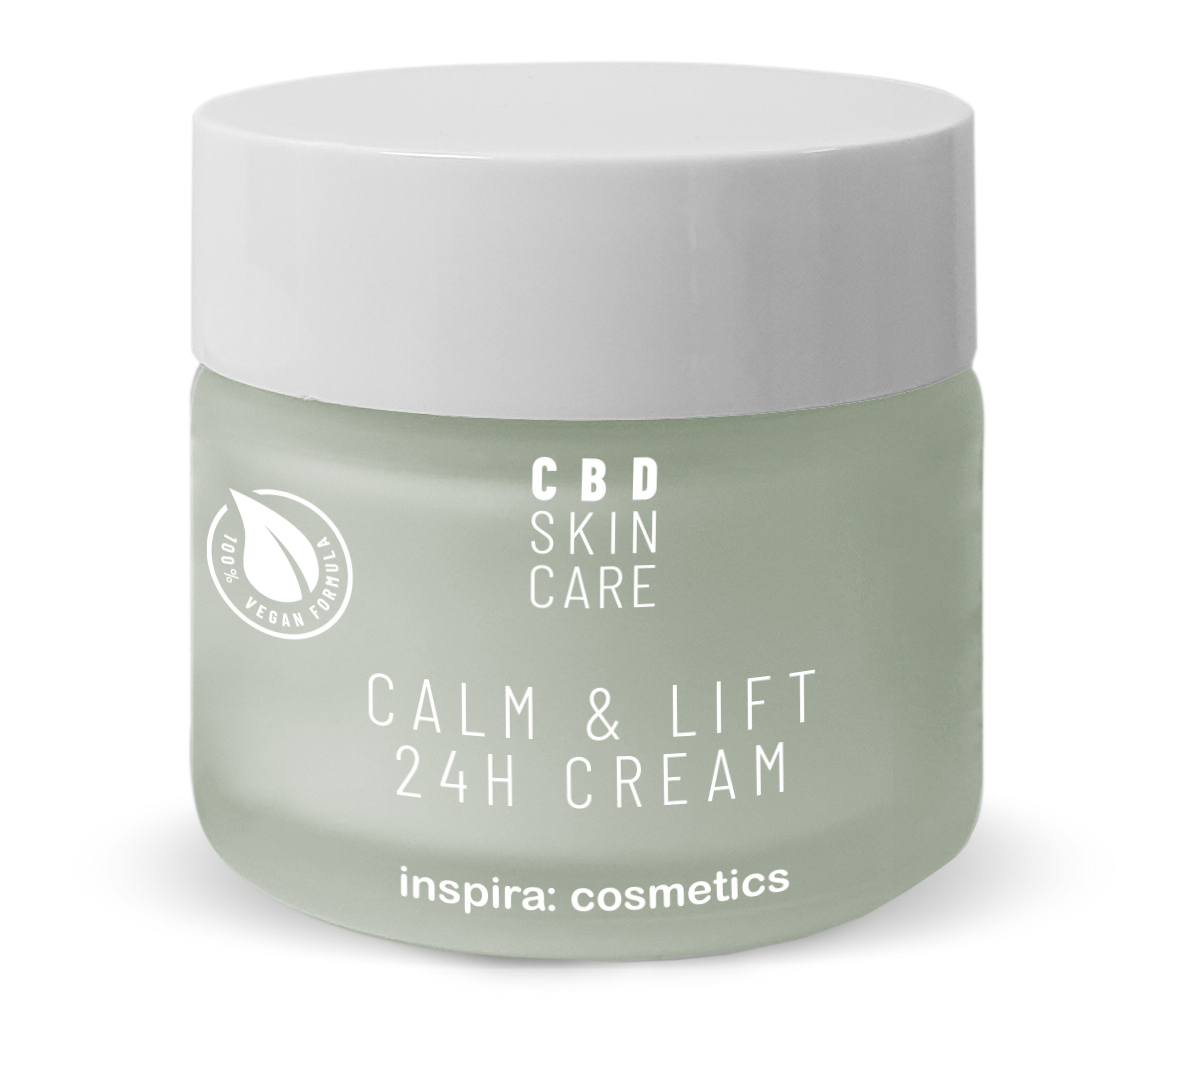 Calm & Lift 24h Cream